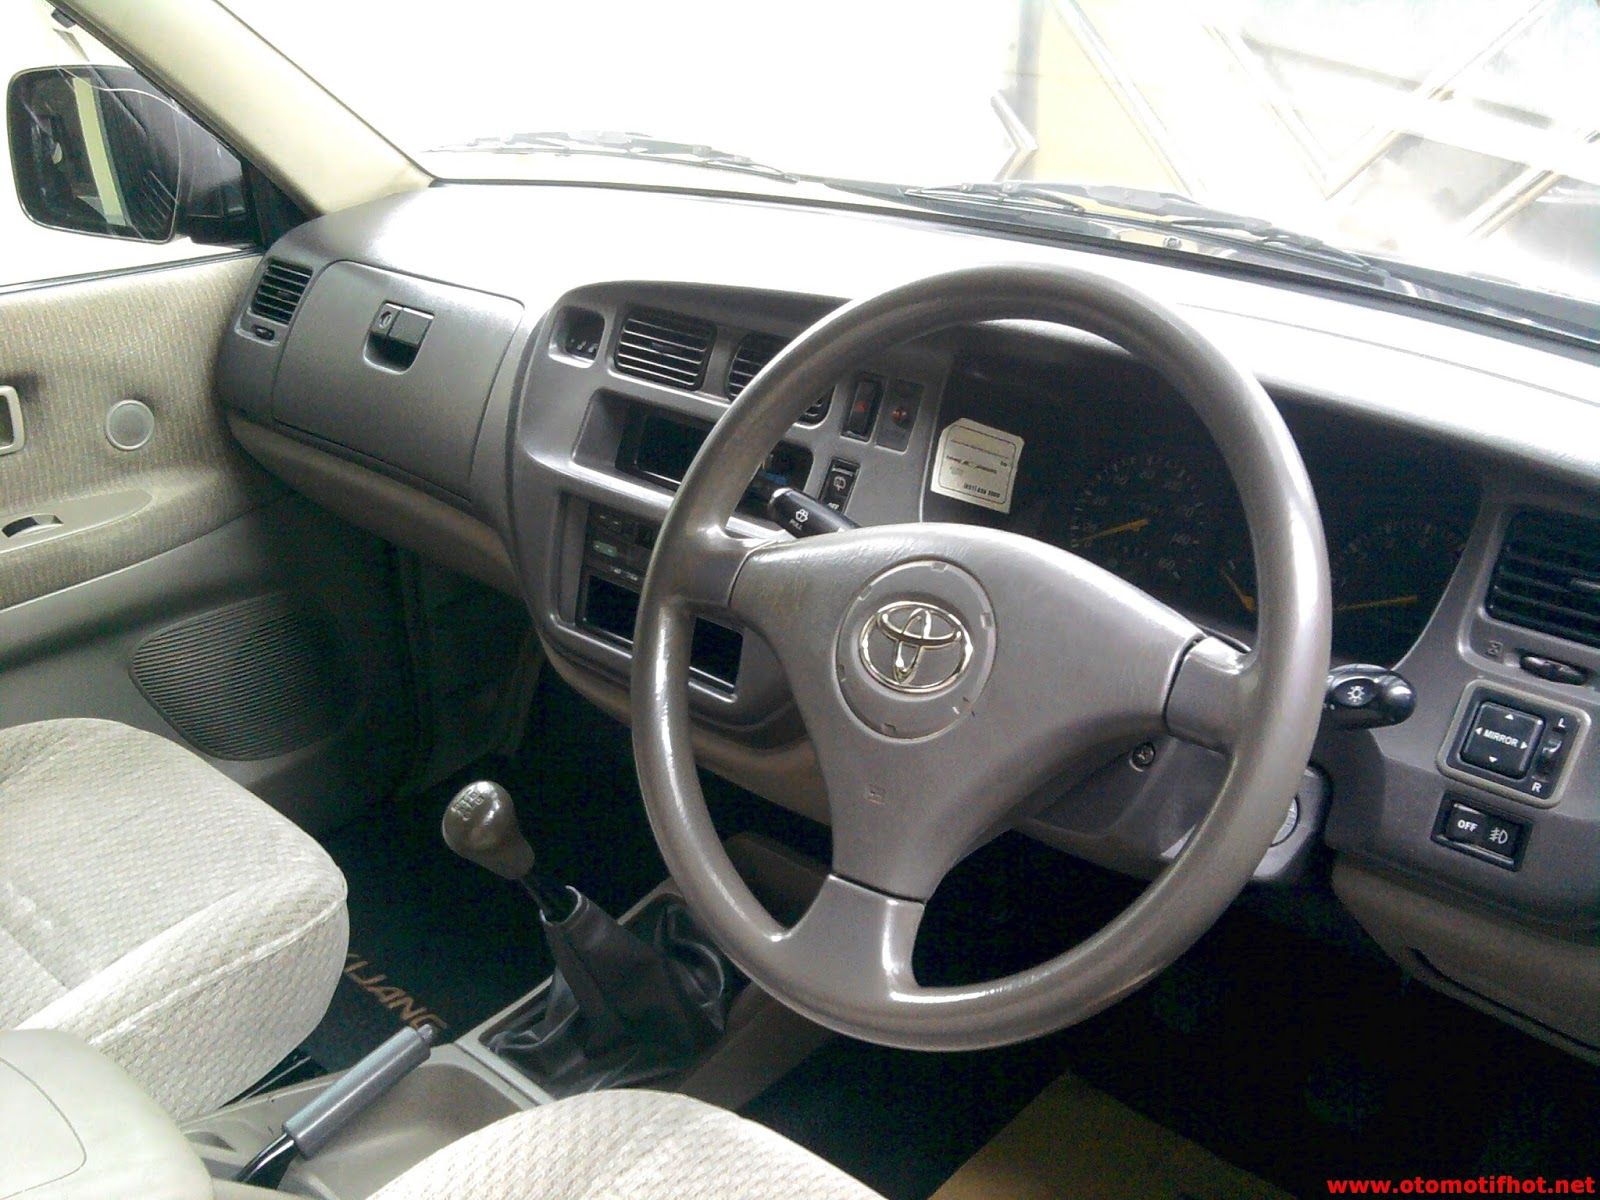  Modifikasi Interior Mobil Kijang Lgx Duniaotto